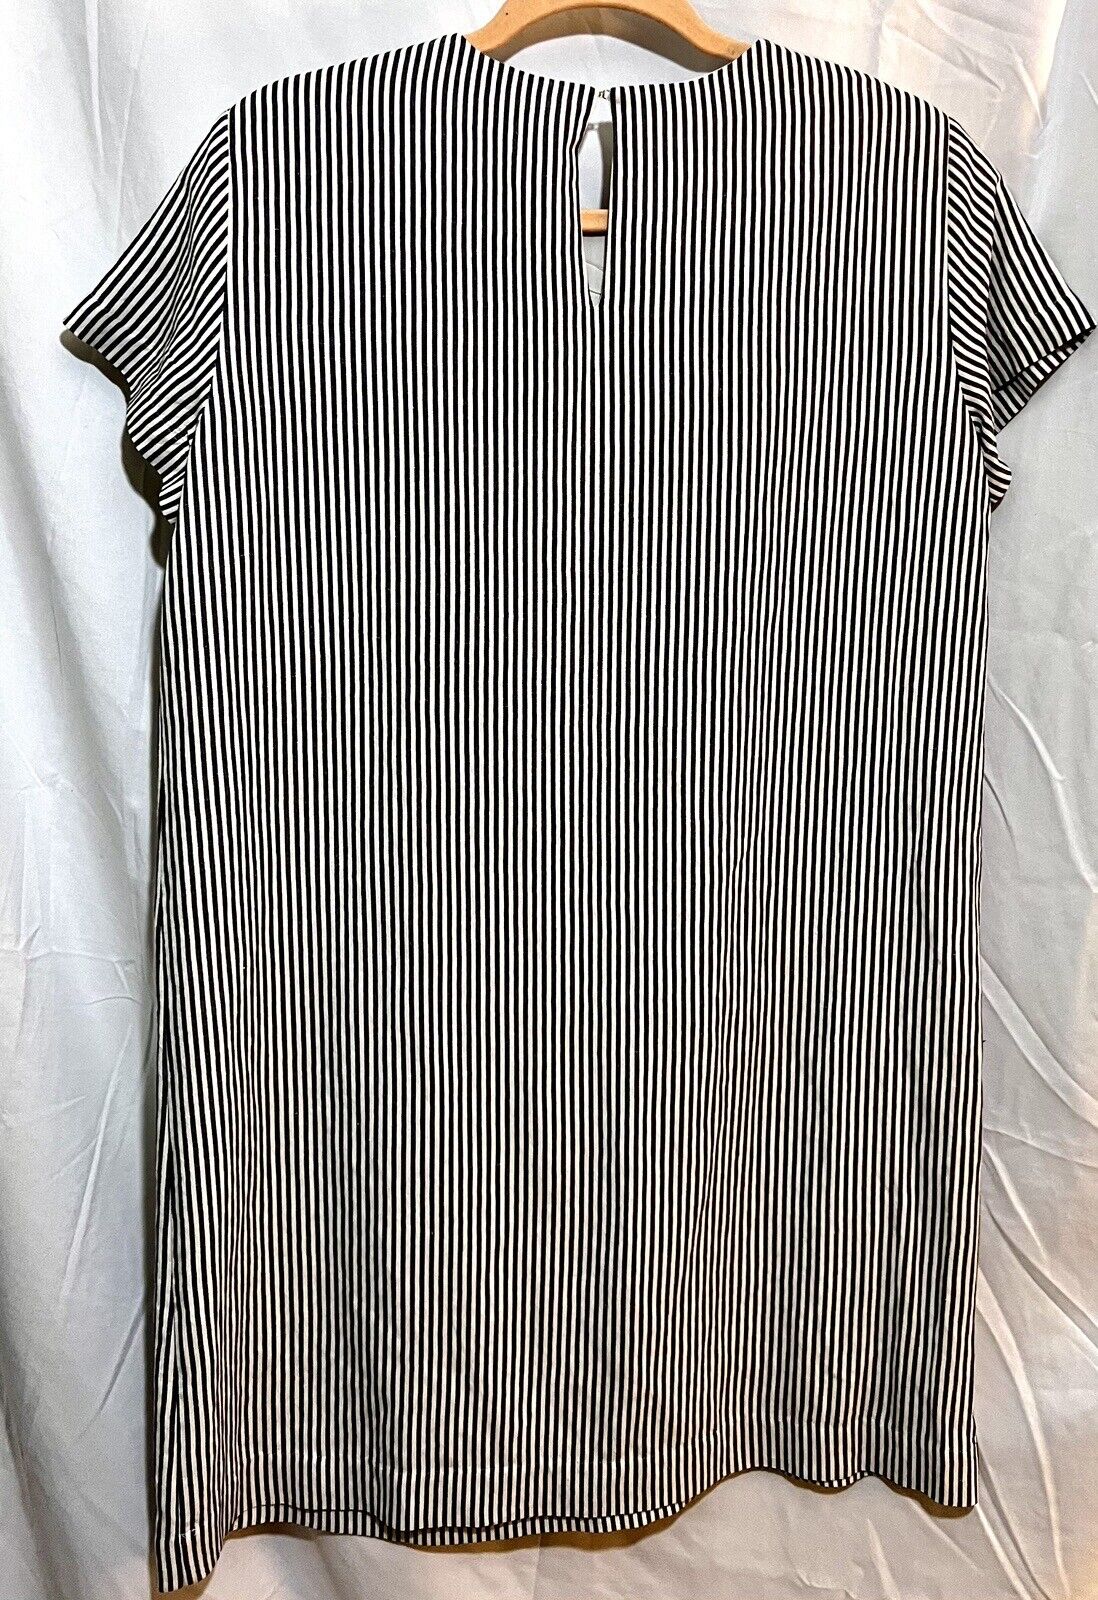 Jenni Kayne Linen Striped T Shirt Dress Size Medi… - image 3